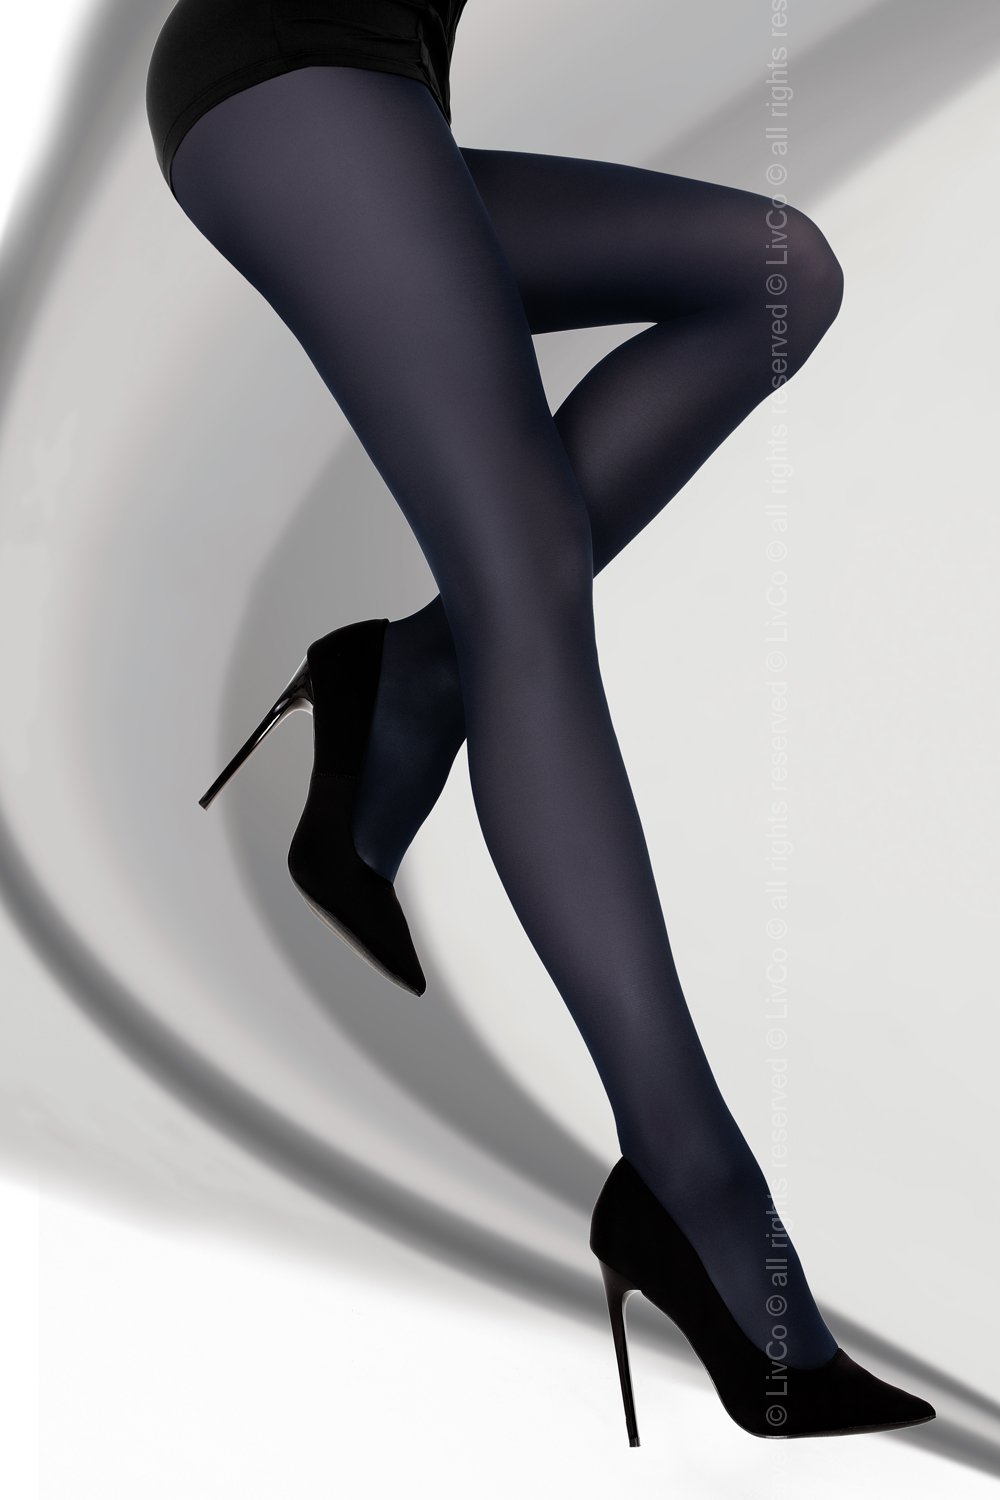 Rajstopy Model Marcela 40 DEN Midnight Blue - Livia Corsetti Fashion Granatowy Damska